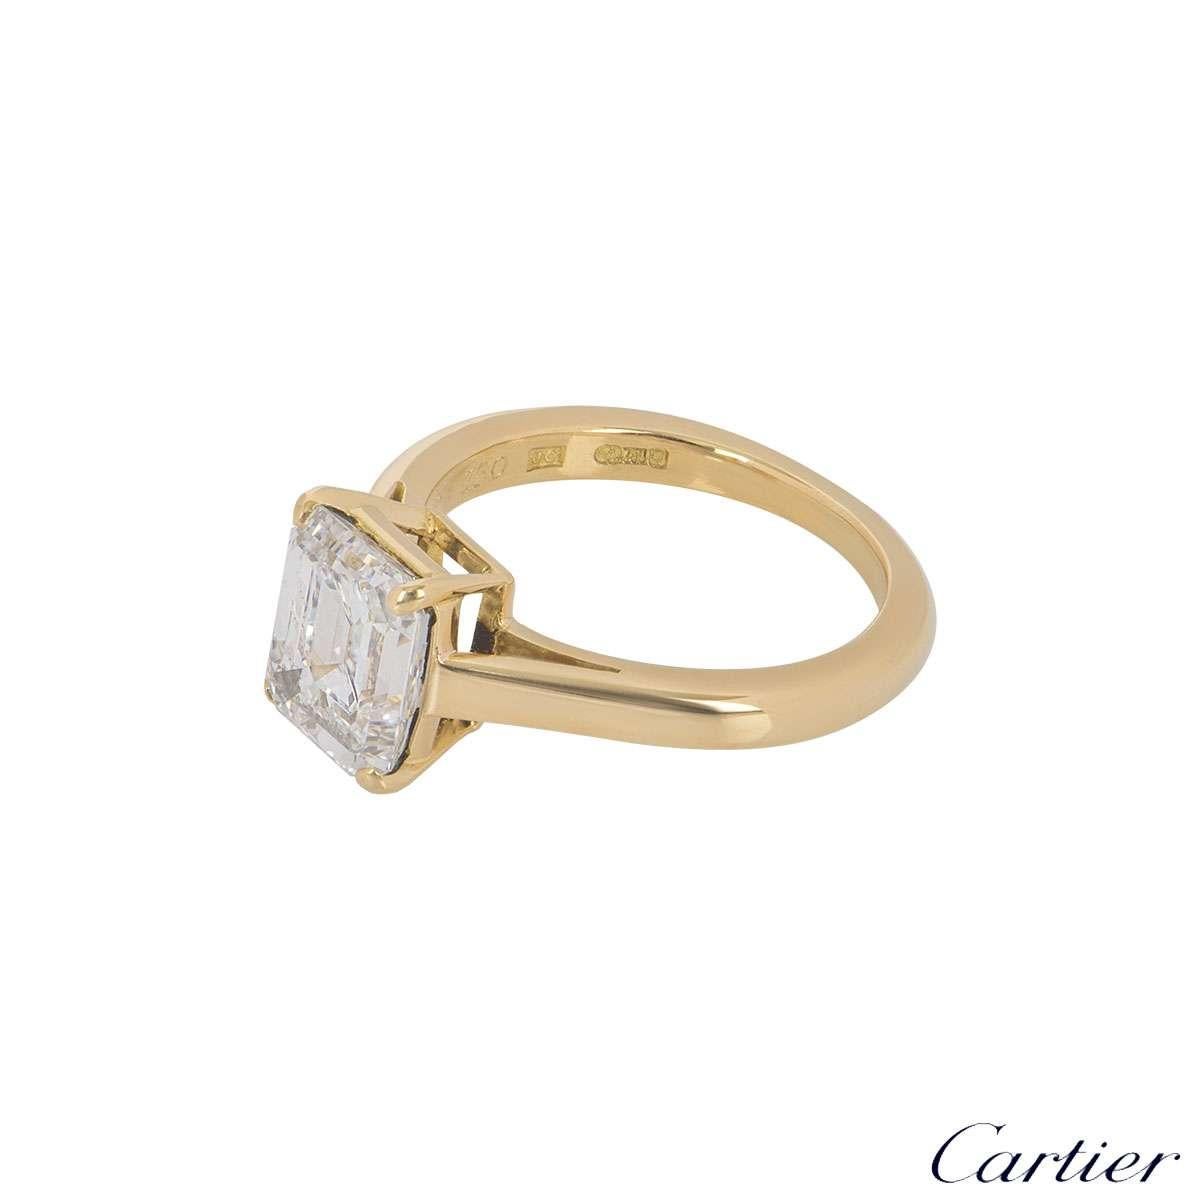 Emerald Cut Cartier Diamond 1895 Solitaire Engagement Ring 1.84 Carat